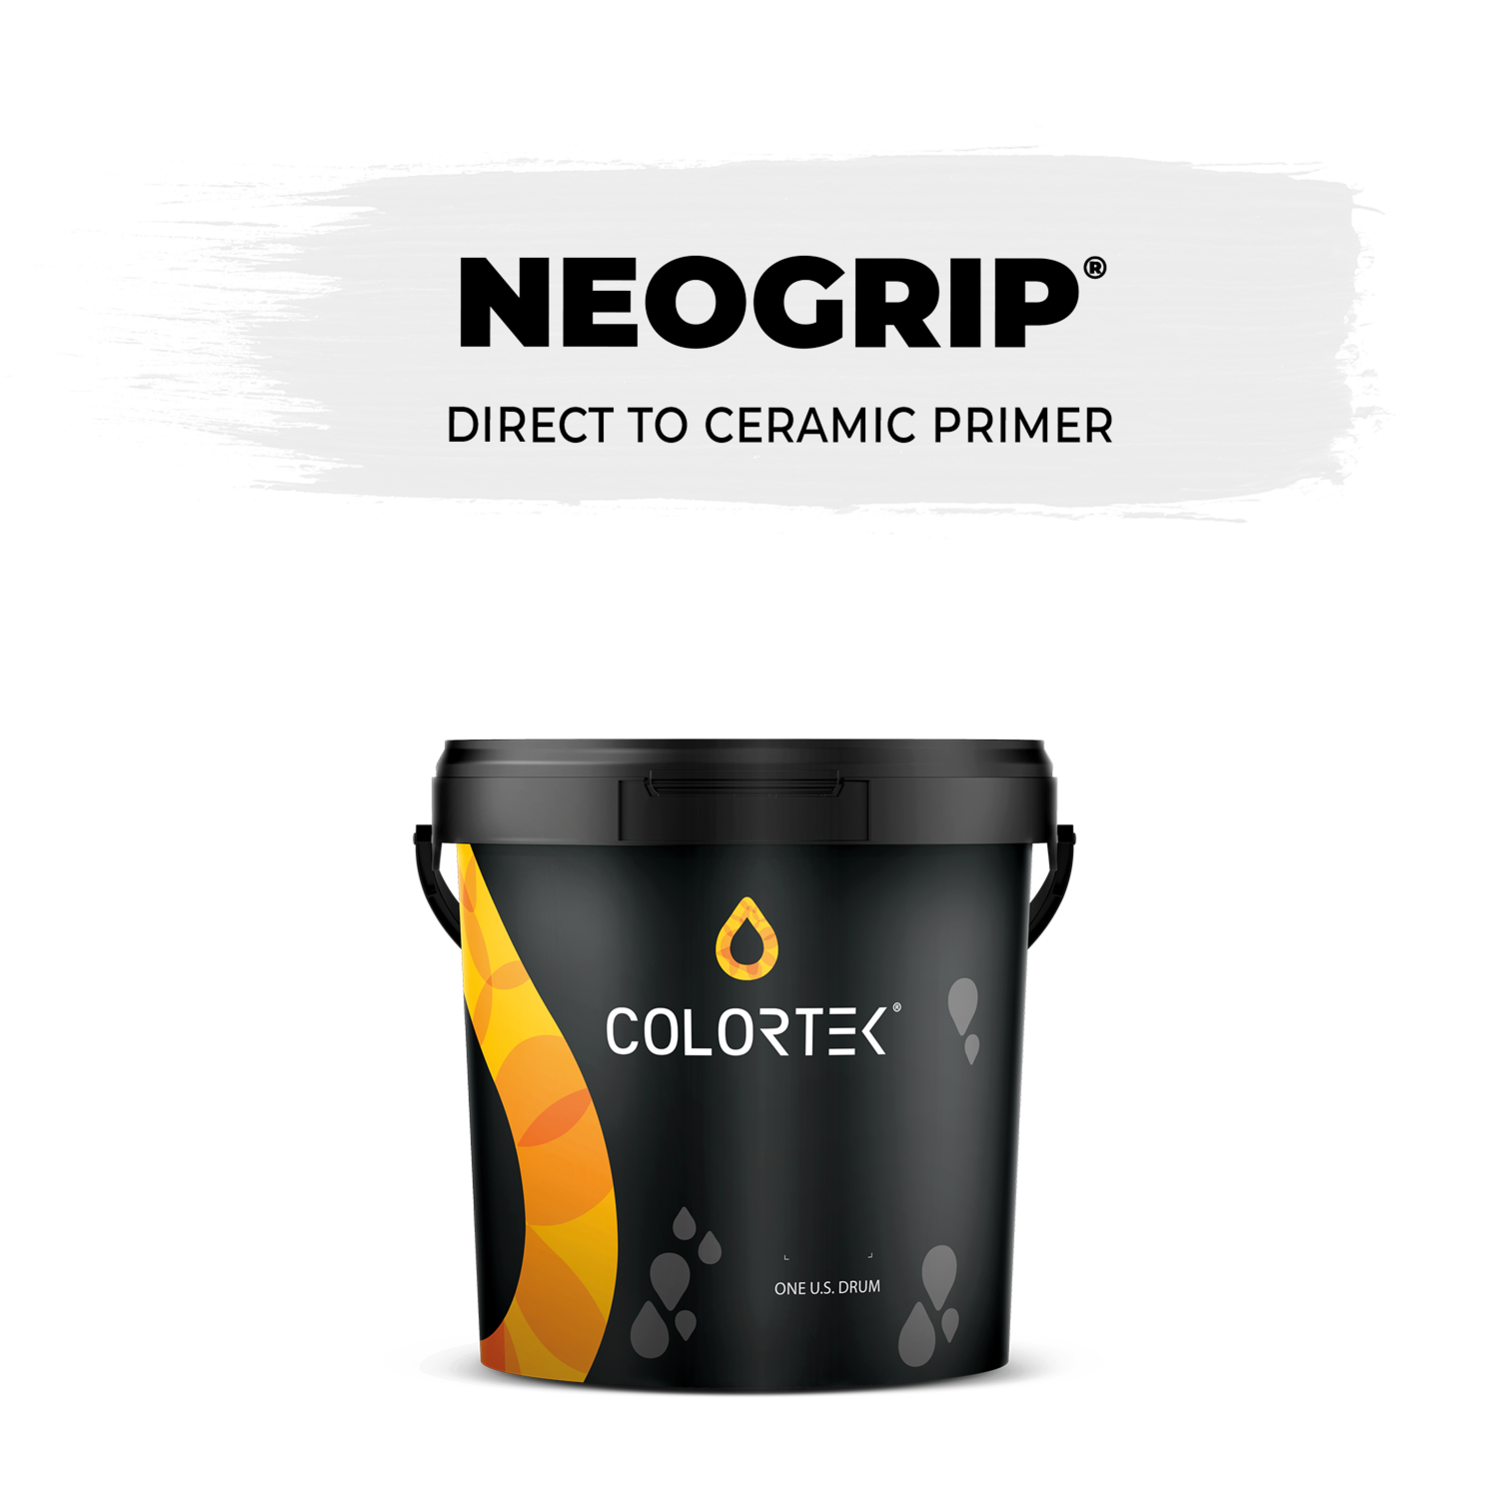 Neogrip Direct to Ceramic Primer